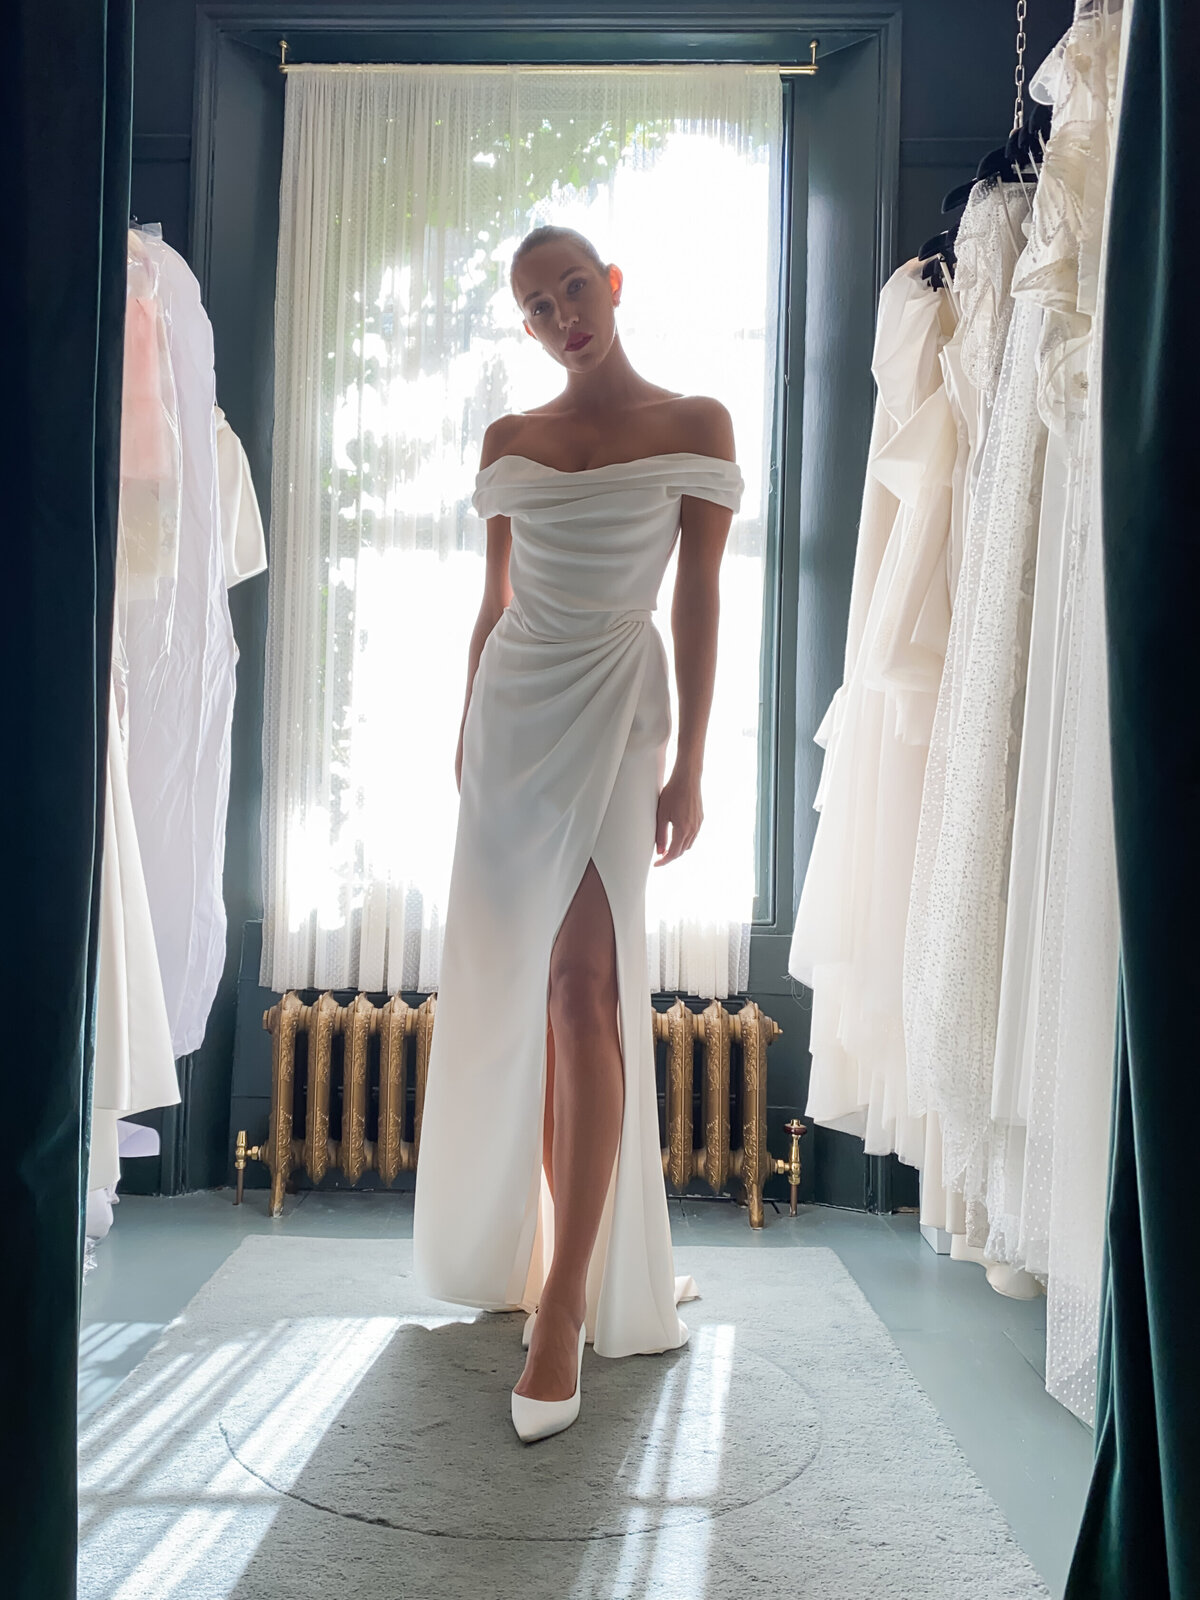 bride wearing white  satin wedding dress in front of window